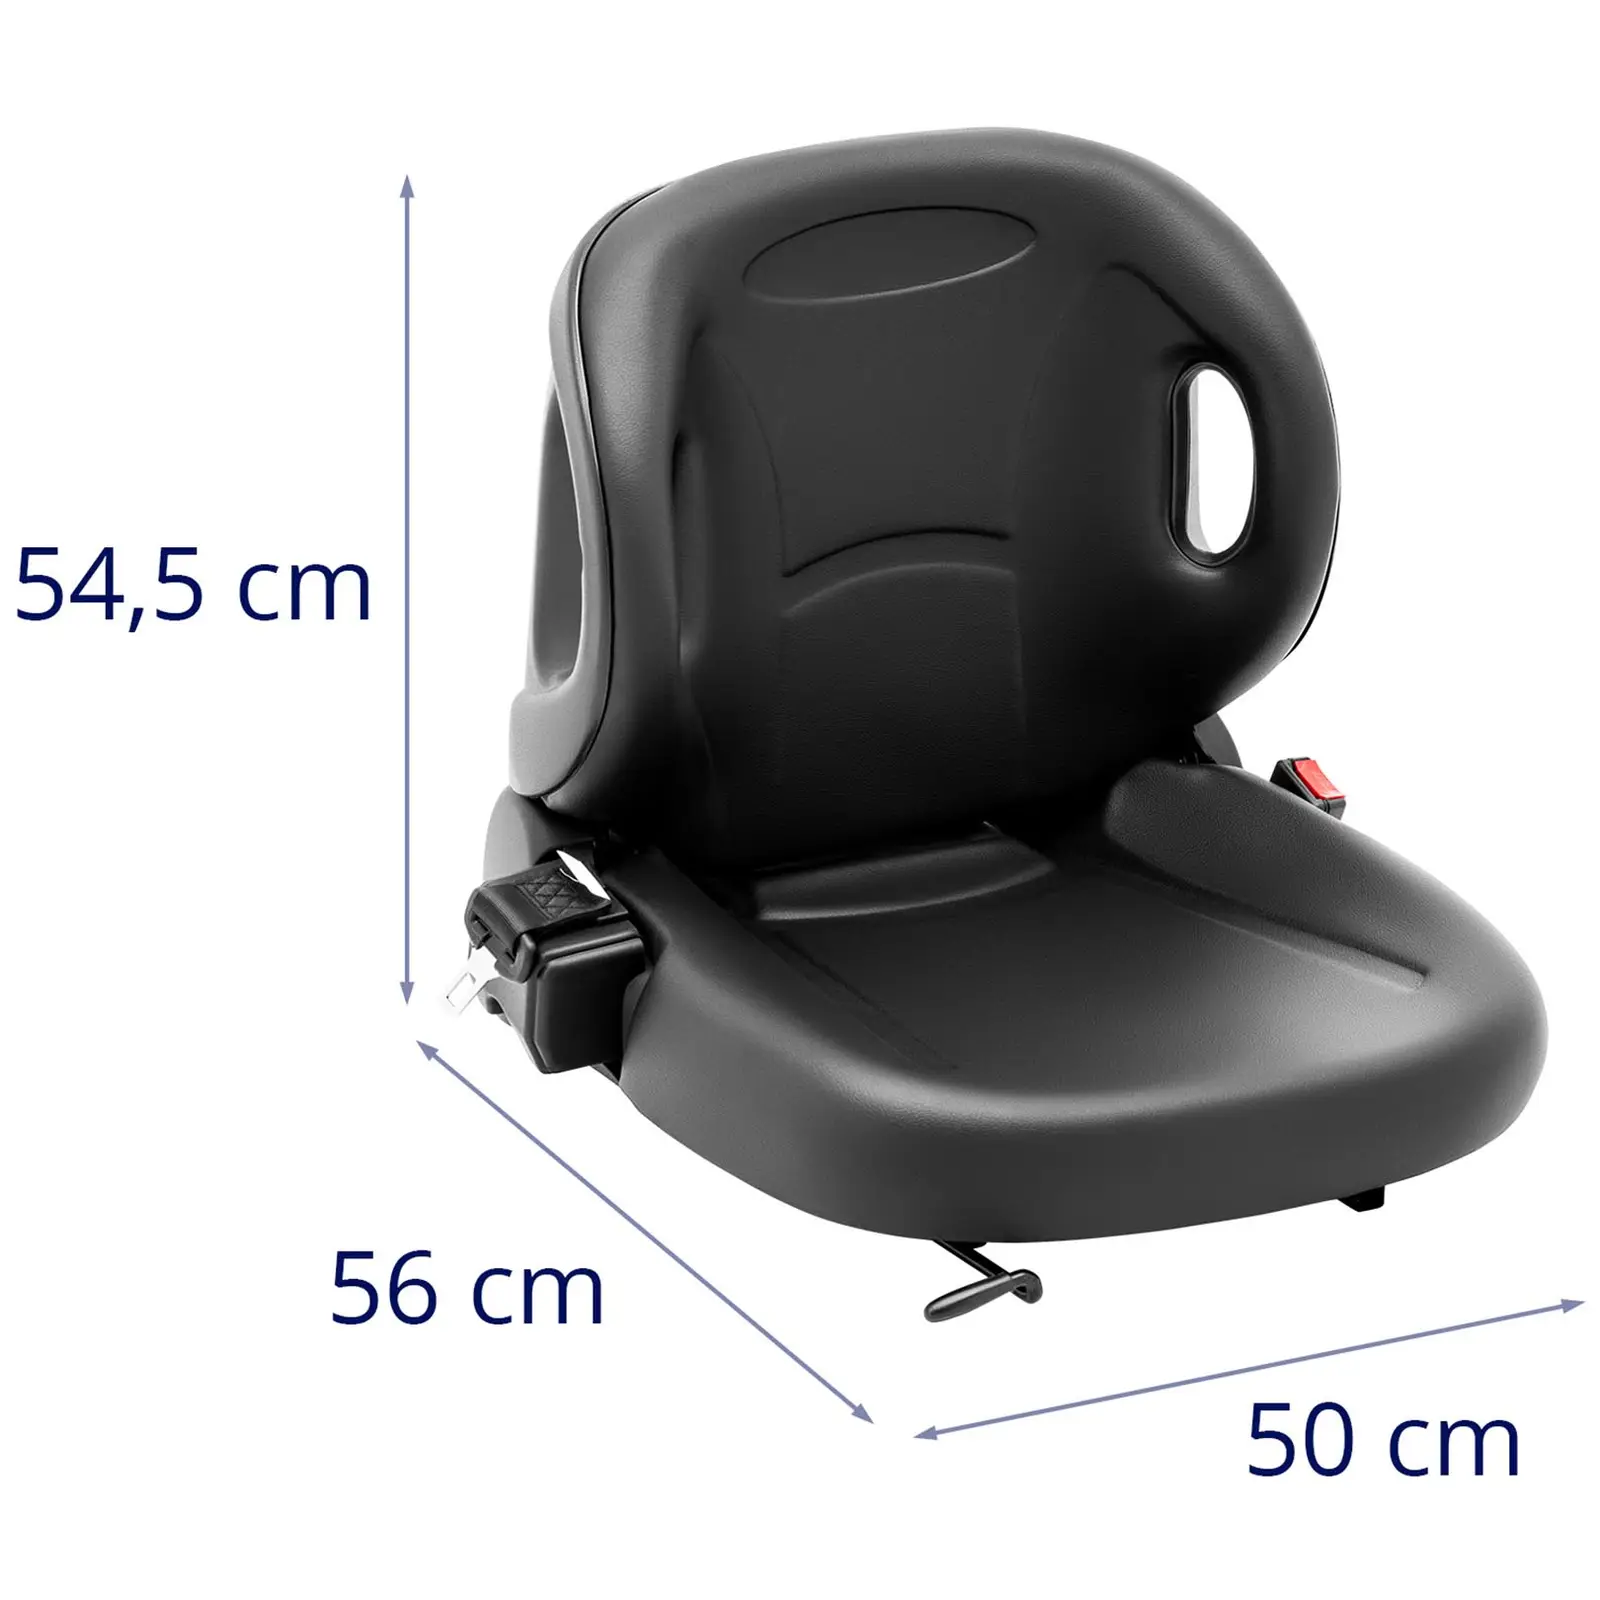 Tractor Seat - 50 x 50 cm - adjustable